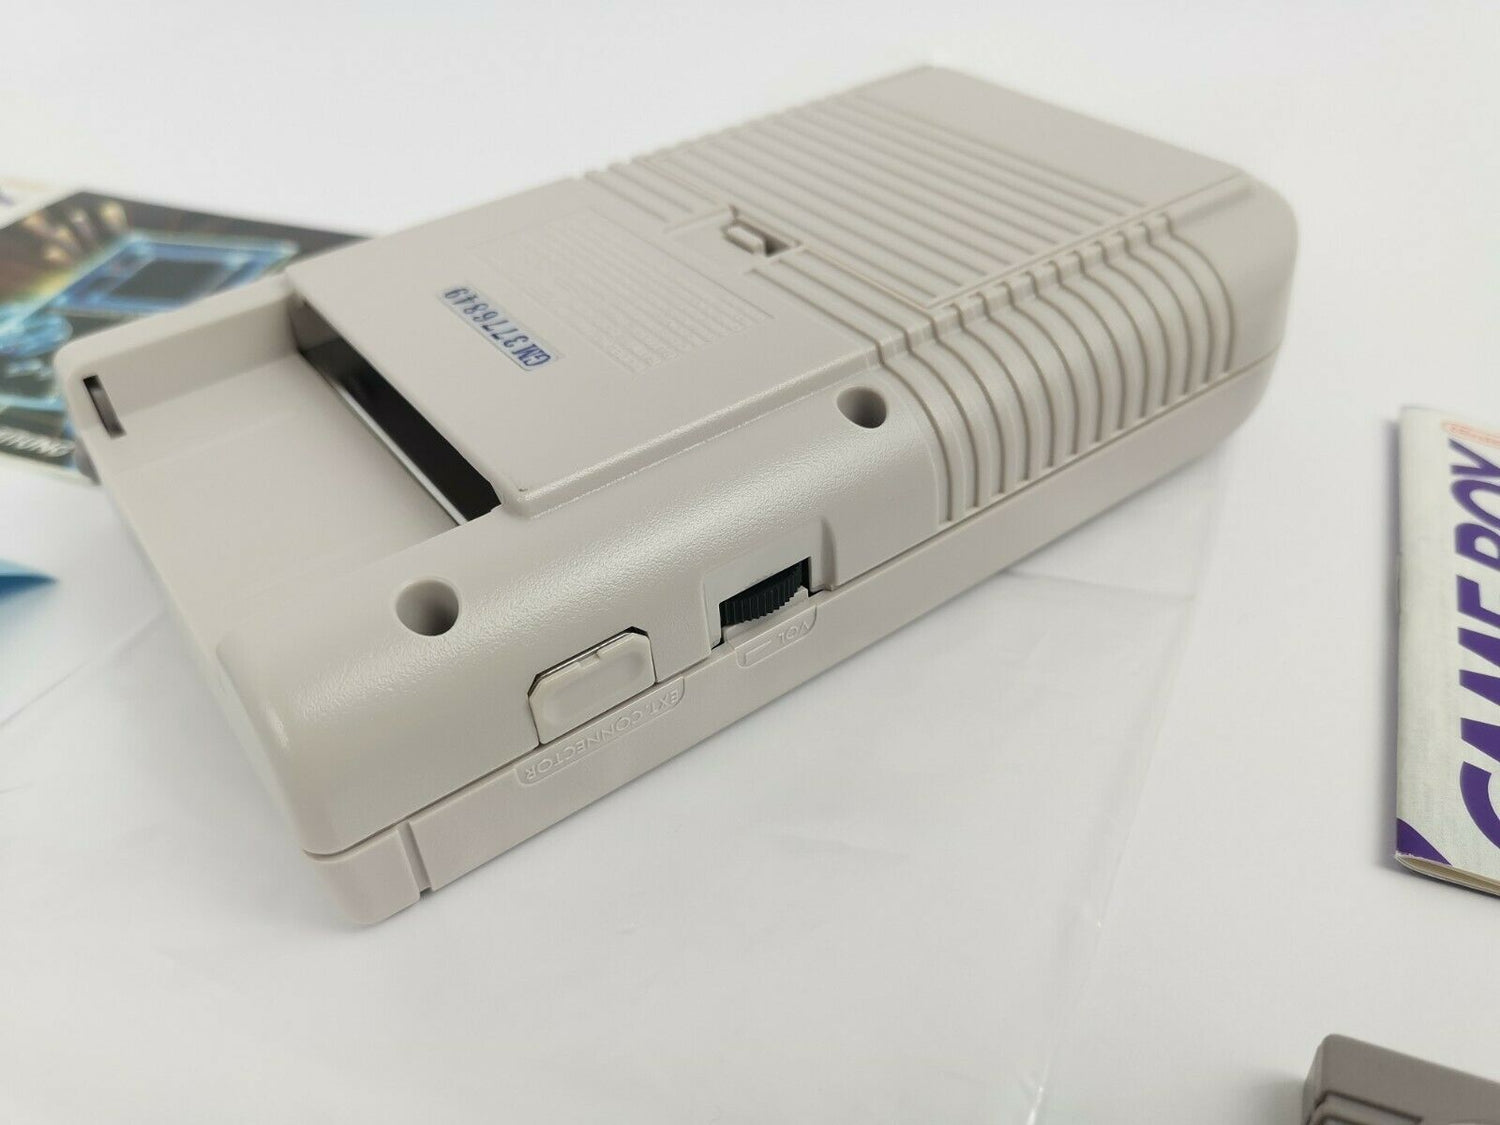 Nintendo Gameboy Classic Konsole Tetris Pak | Game Boy | OVP | DMG-S-GATR-NOE